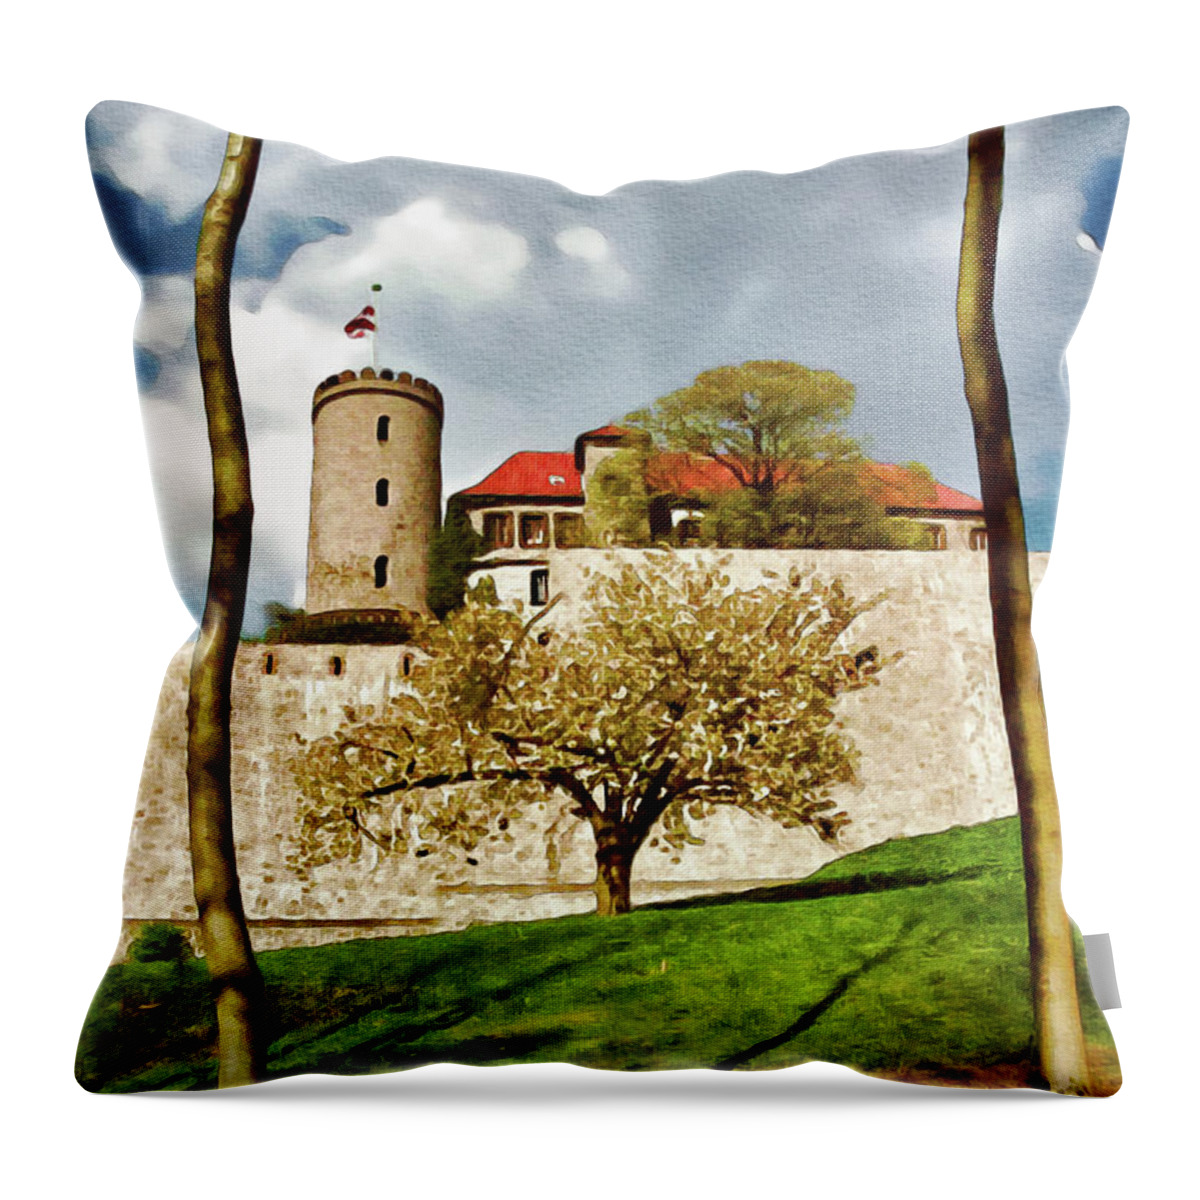 Sparrenberg Castle Throw Pillow featuring the photograph Landmark Sparrenburg Castle by Gabriele Pomykaj